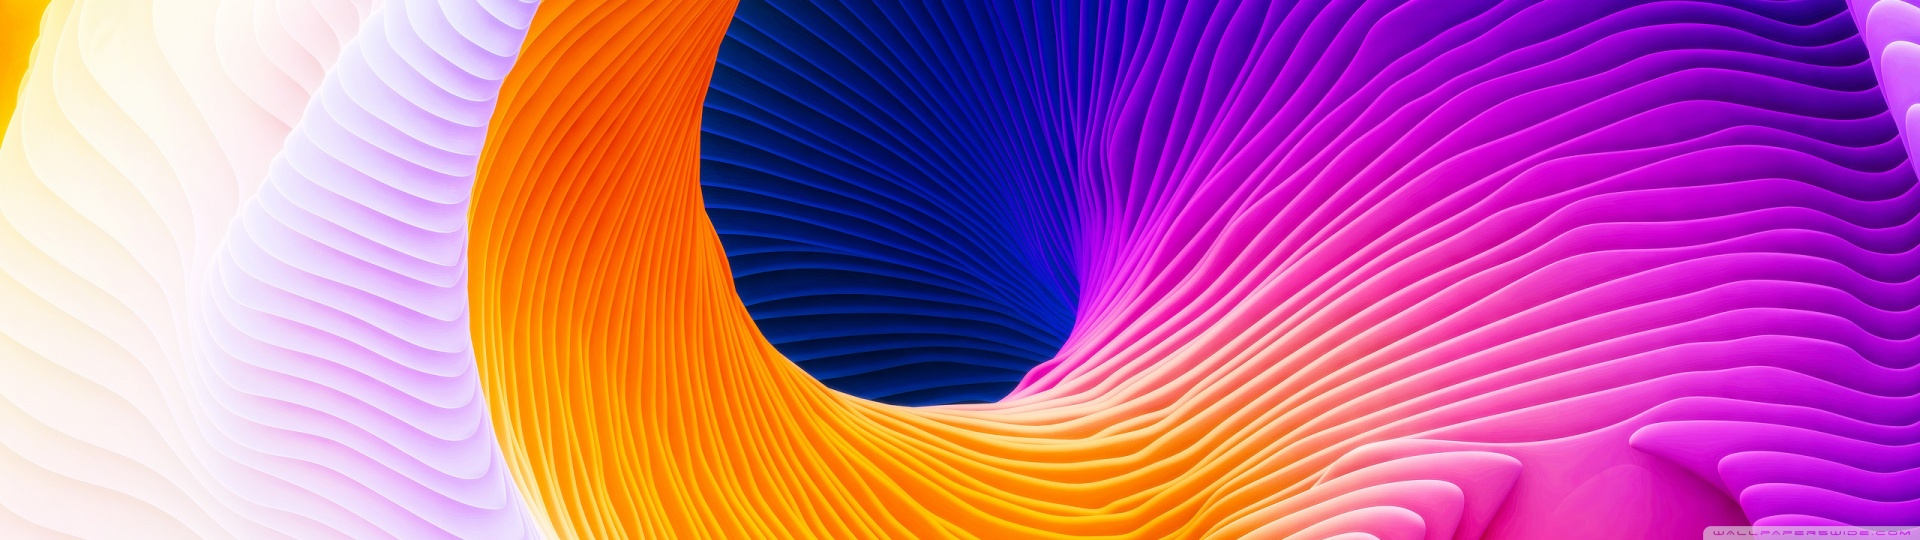 3D Abstract Spiral Ultra HD Desktop Background Wallpaper for ...